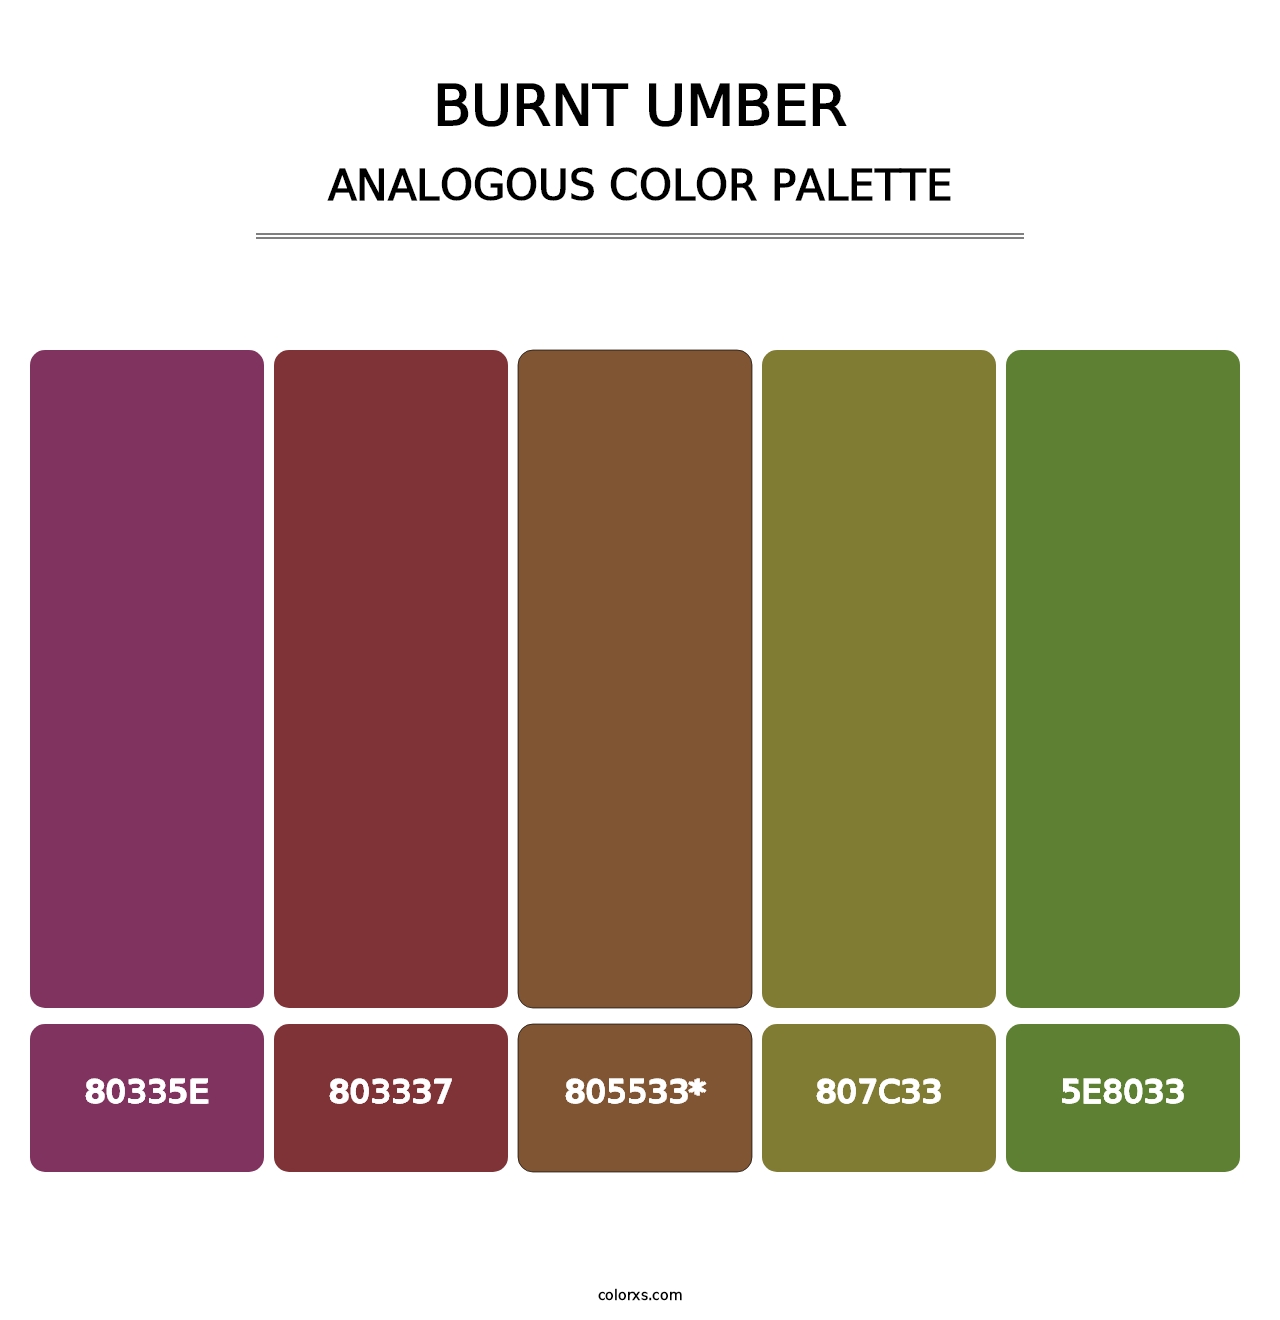 Burnt Umber - Analogous Color Palette